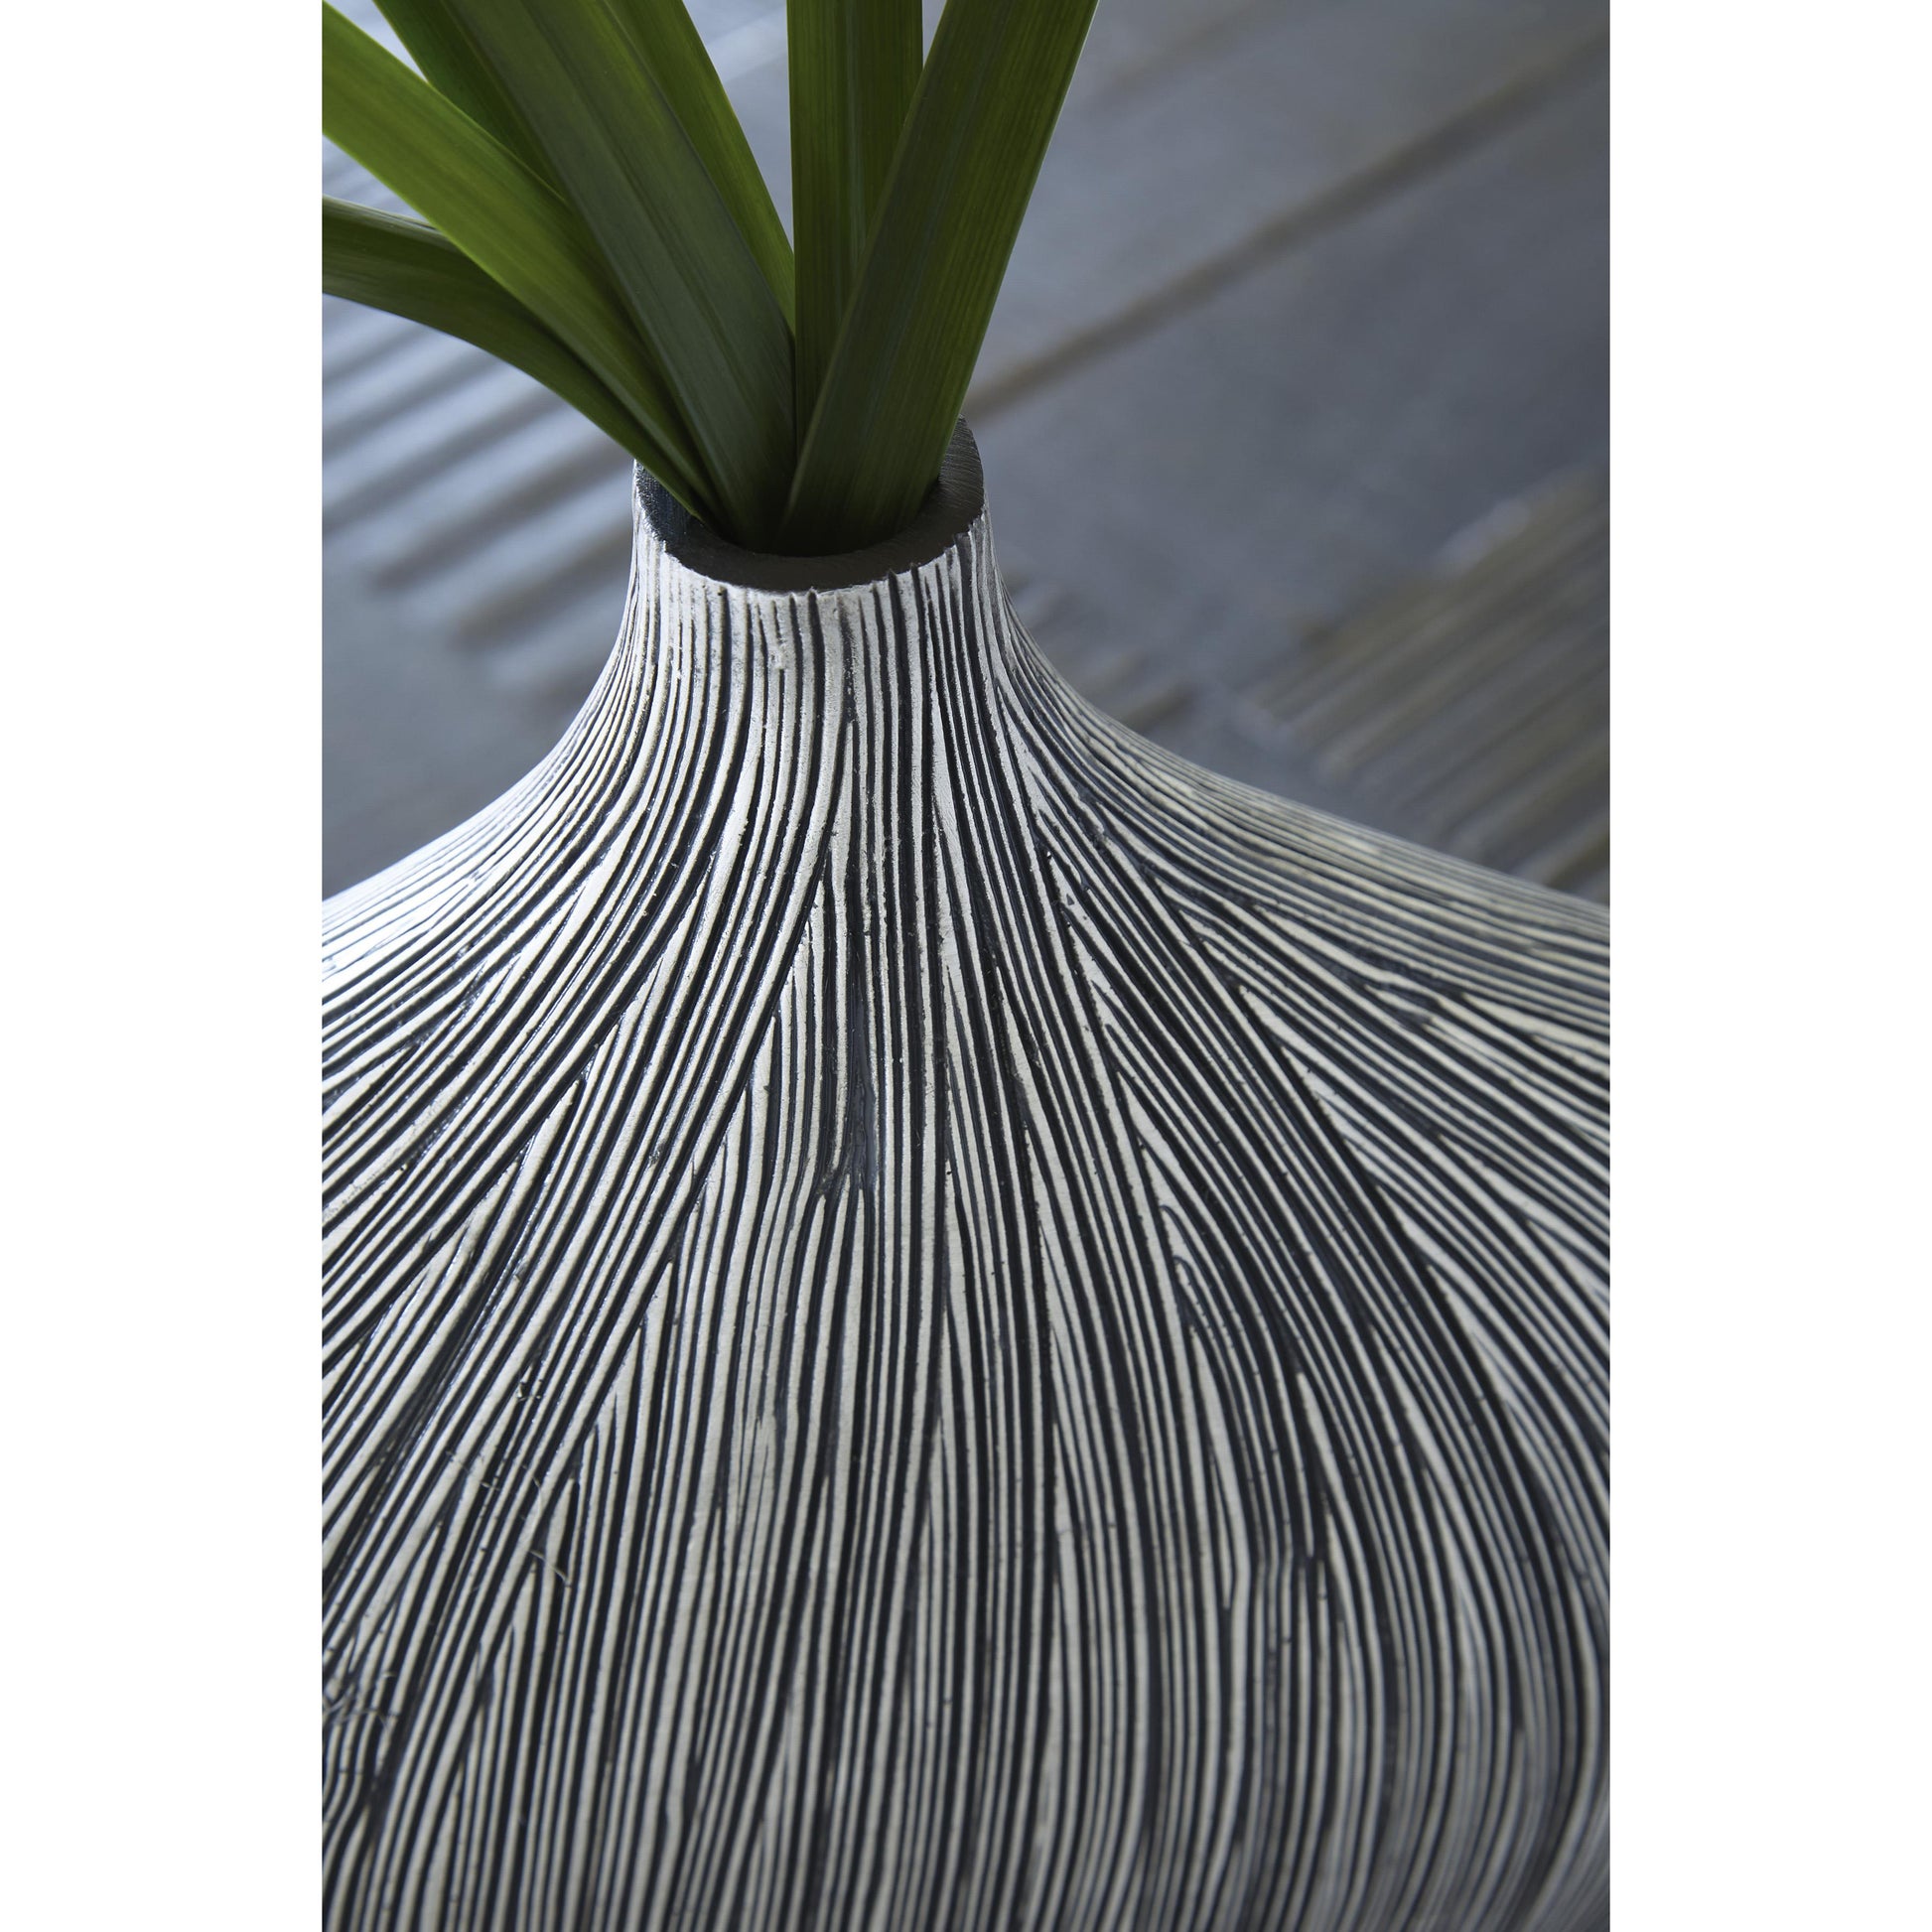 Signature Design by Ashley Home Decor Vases & Bowls A2000547 IMAGE 4